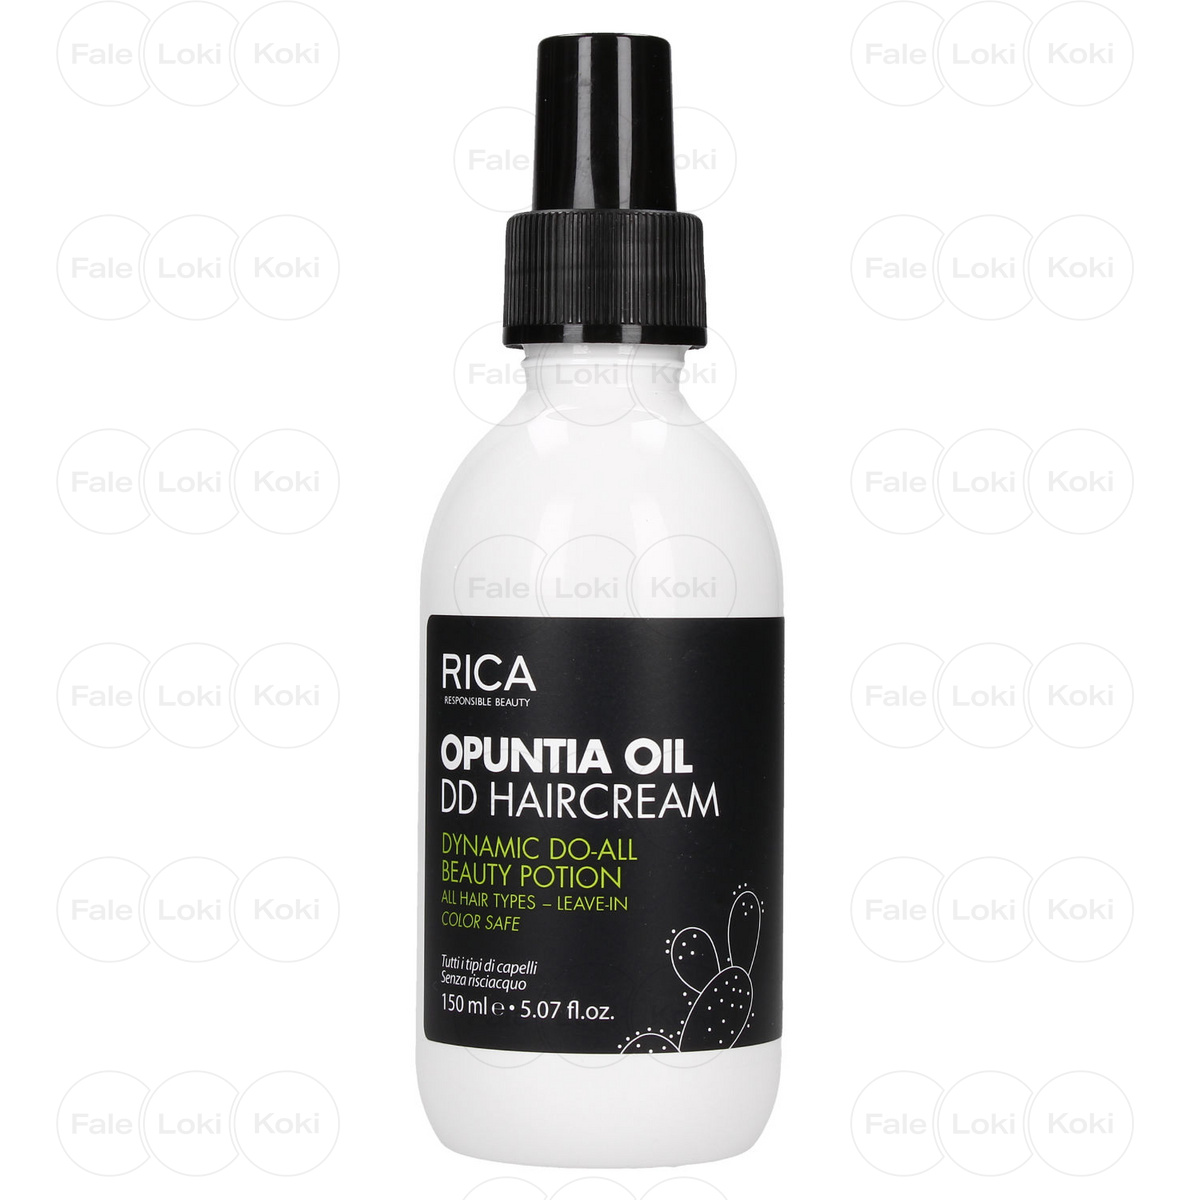 RICA OPUNTIA OIL krem wielofunkcyjny DD Haircream 150 ml